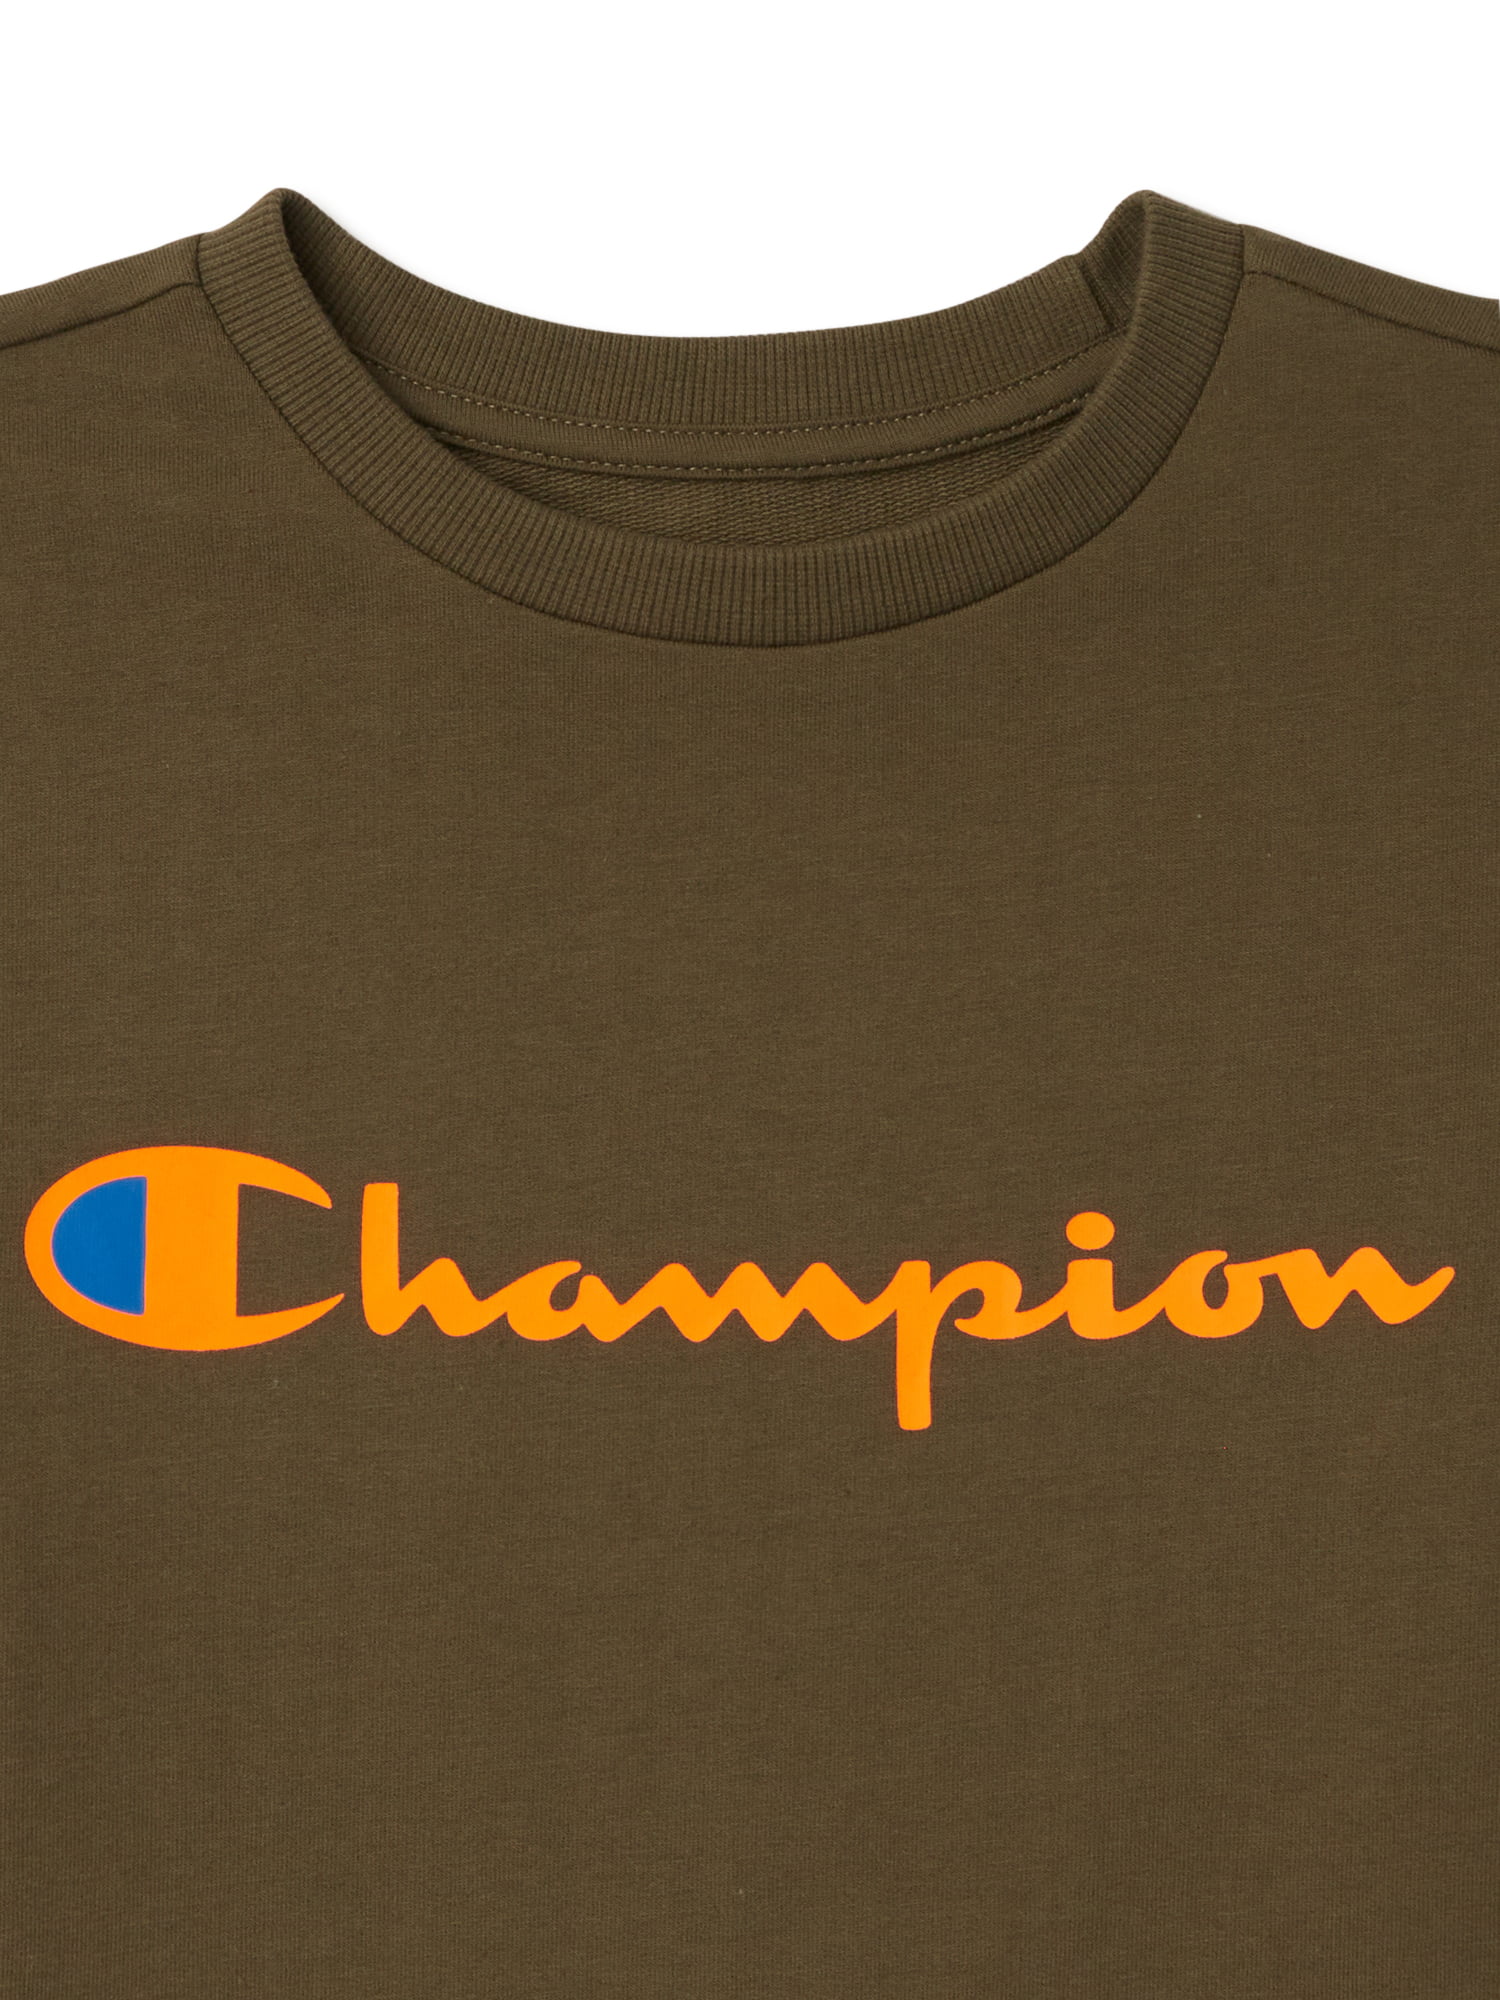 Champion Boys Signature Fleece Crewneck Sweatshirt, Sizes 8-20